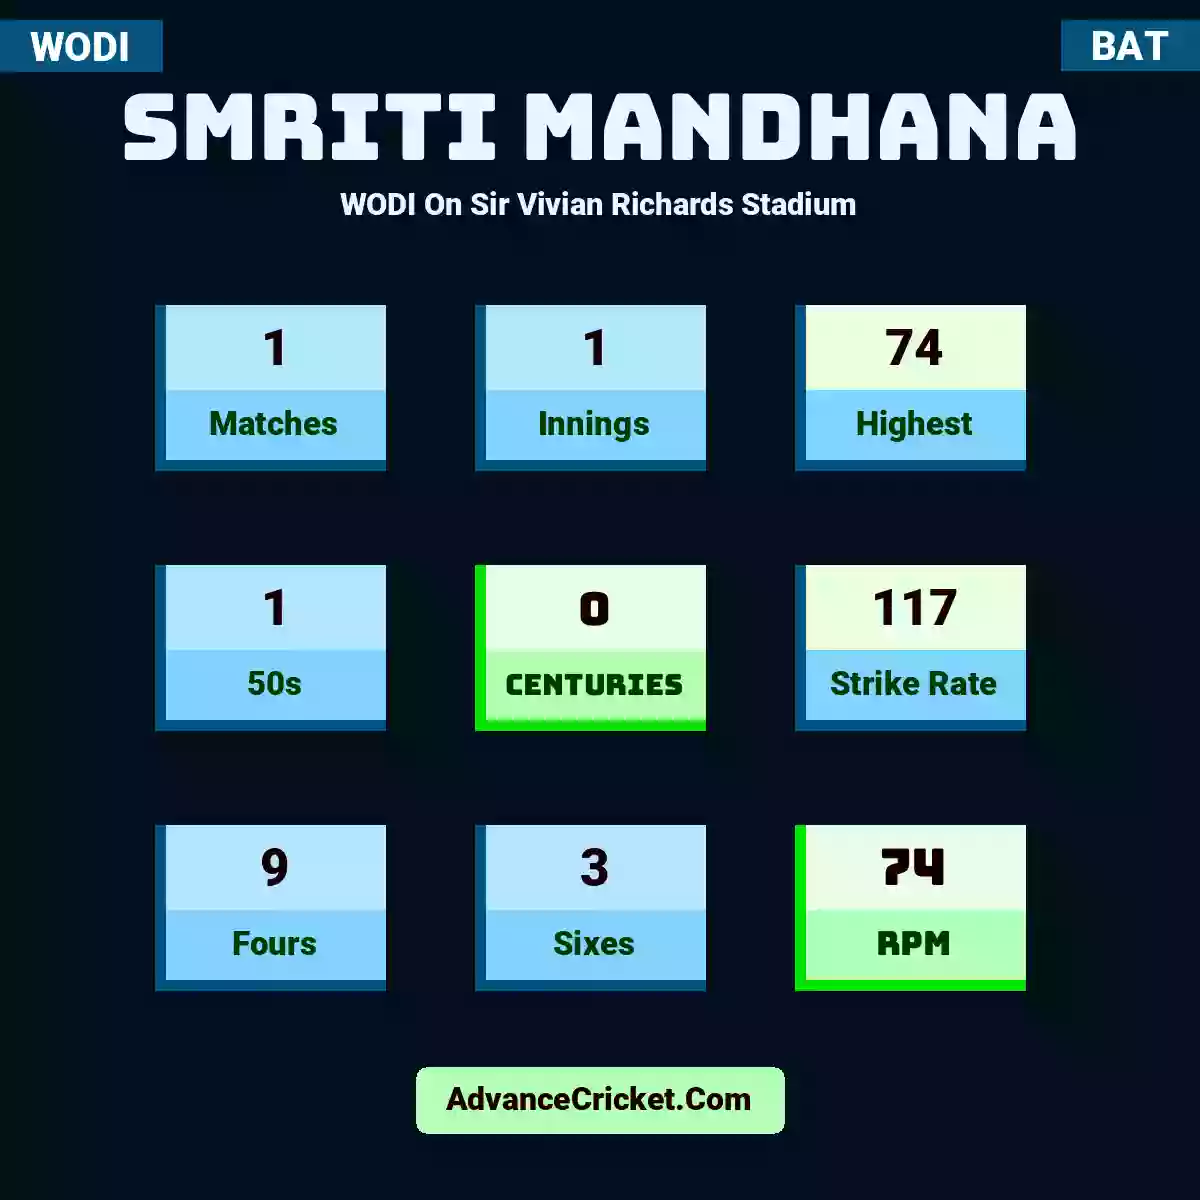 Smriti Mandhana WODI  On Sir Vivian Richards Stadium, Smriti Mandhana played 1 matches, scored 74 runs as highest, 1 half-centuries, and 0 centuries, with a strike rate of 117. S.Mandhana hit 9 fours and 3 sixes, with an RPM of 74.